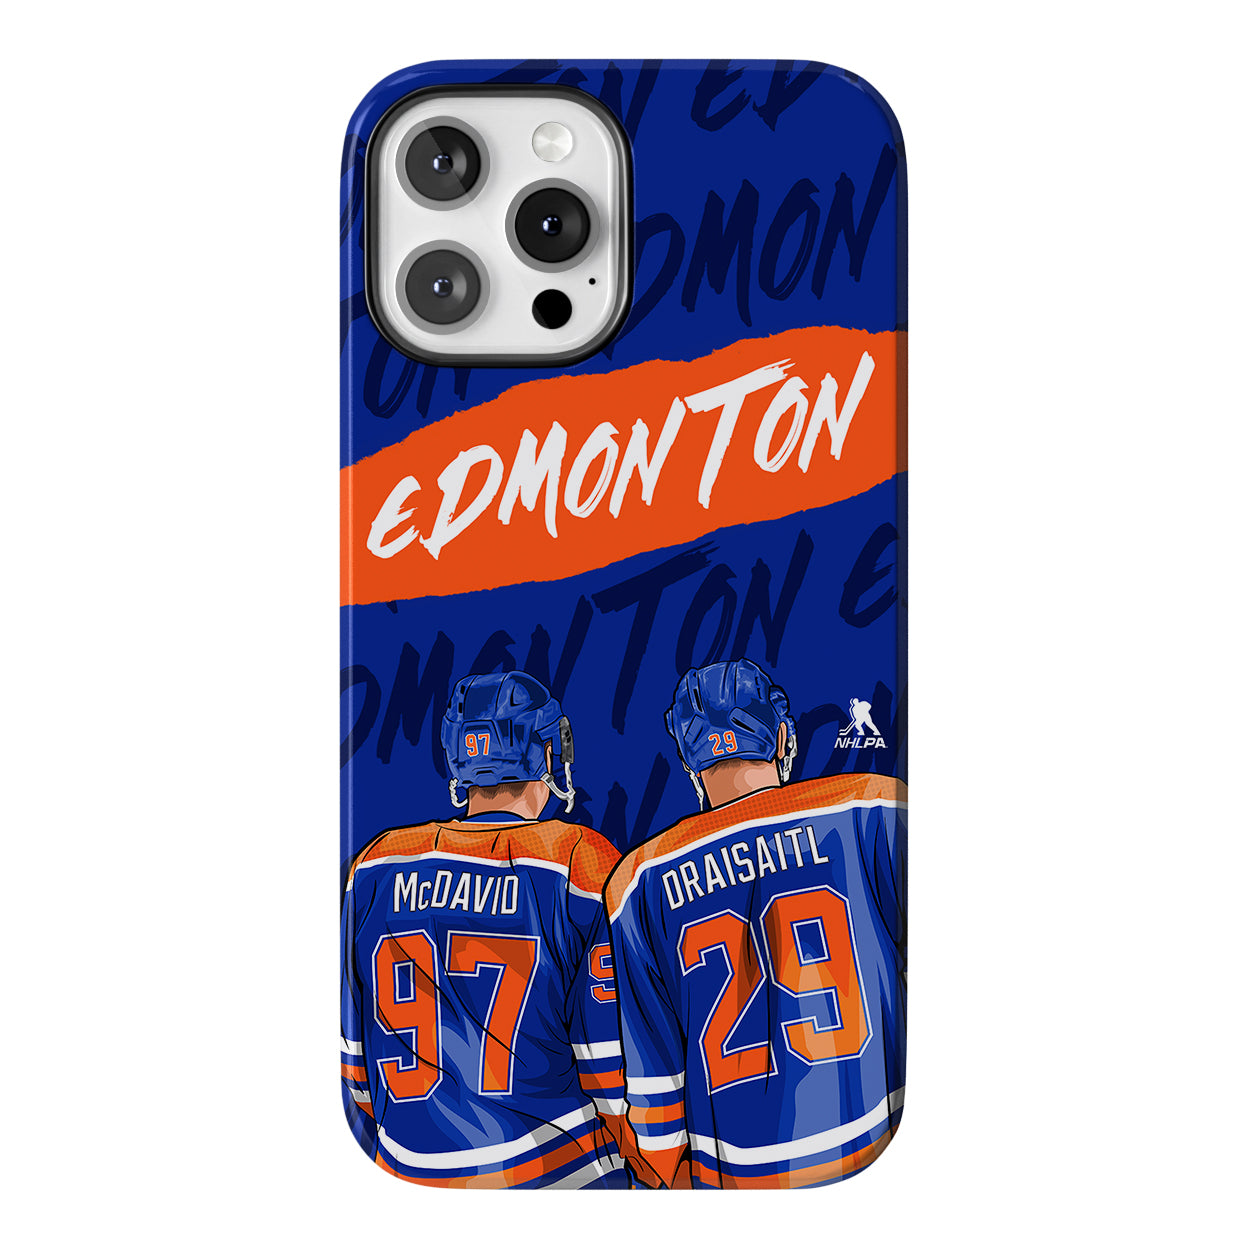 Edmonton Duo Star Series 3.0 Phone Case